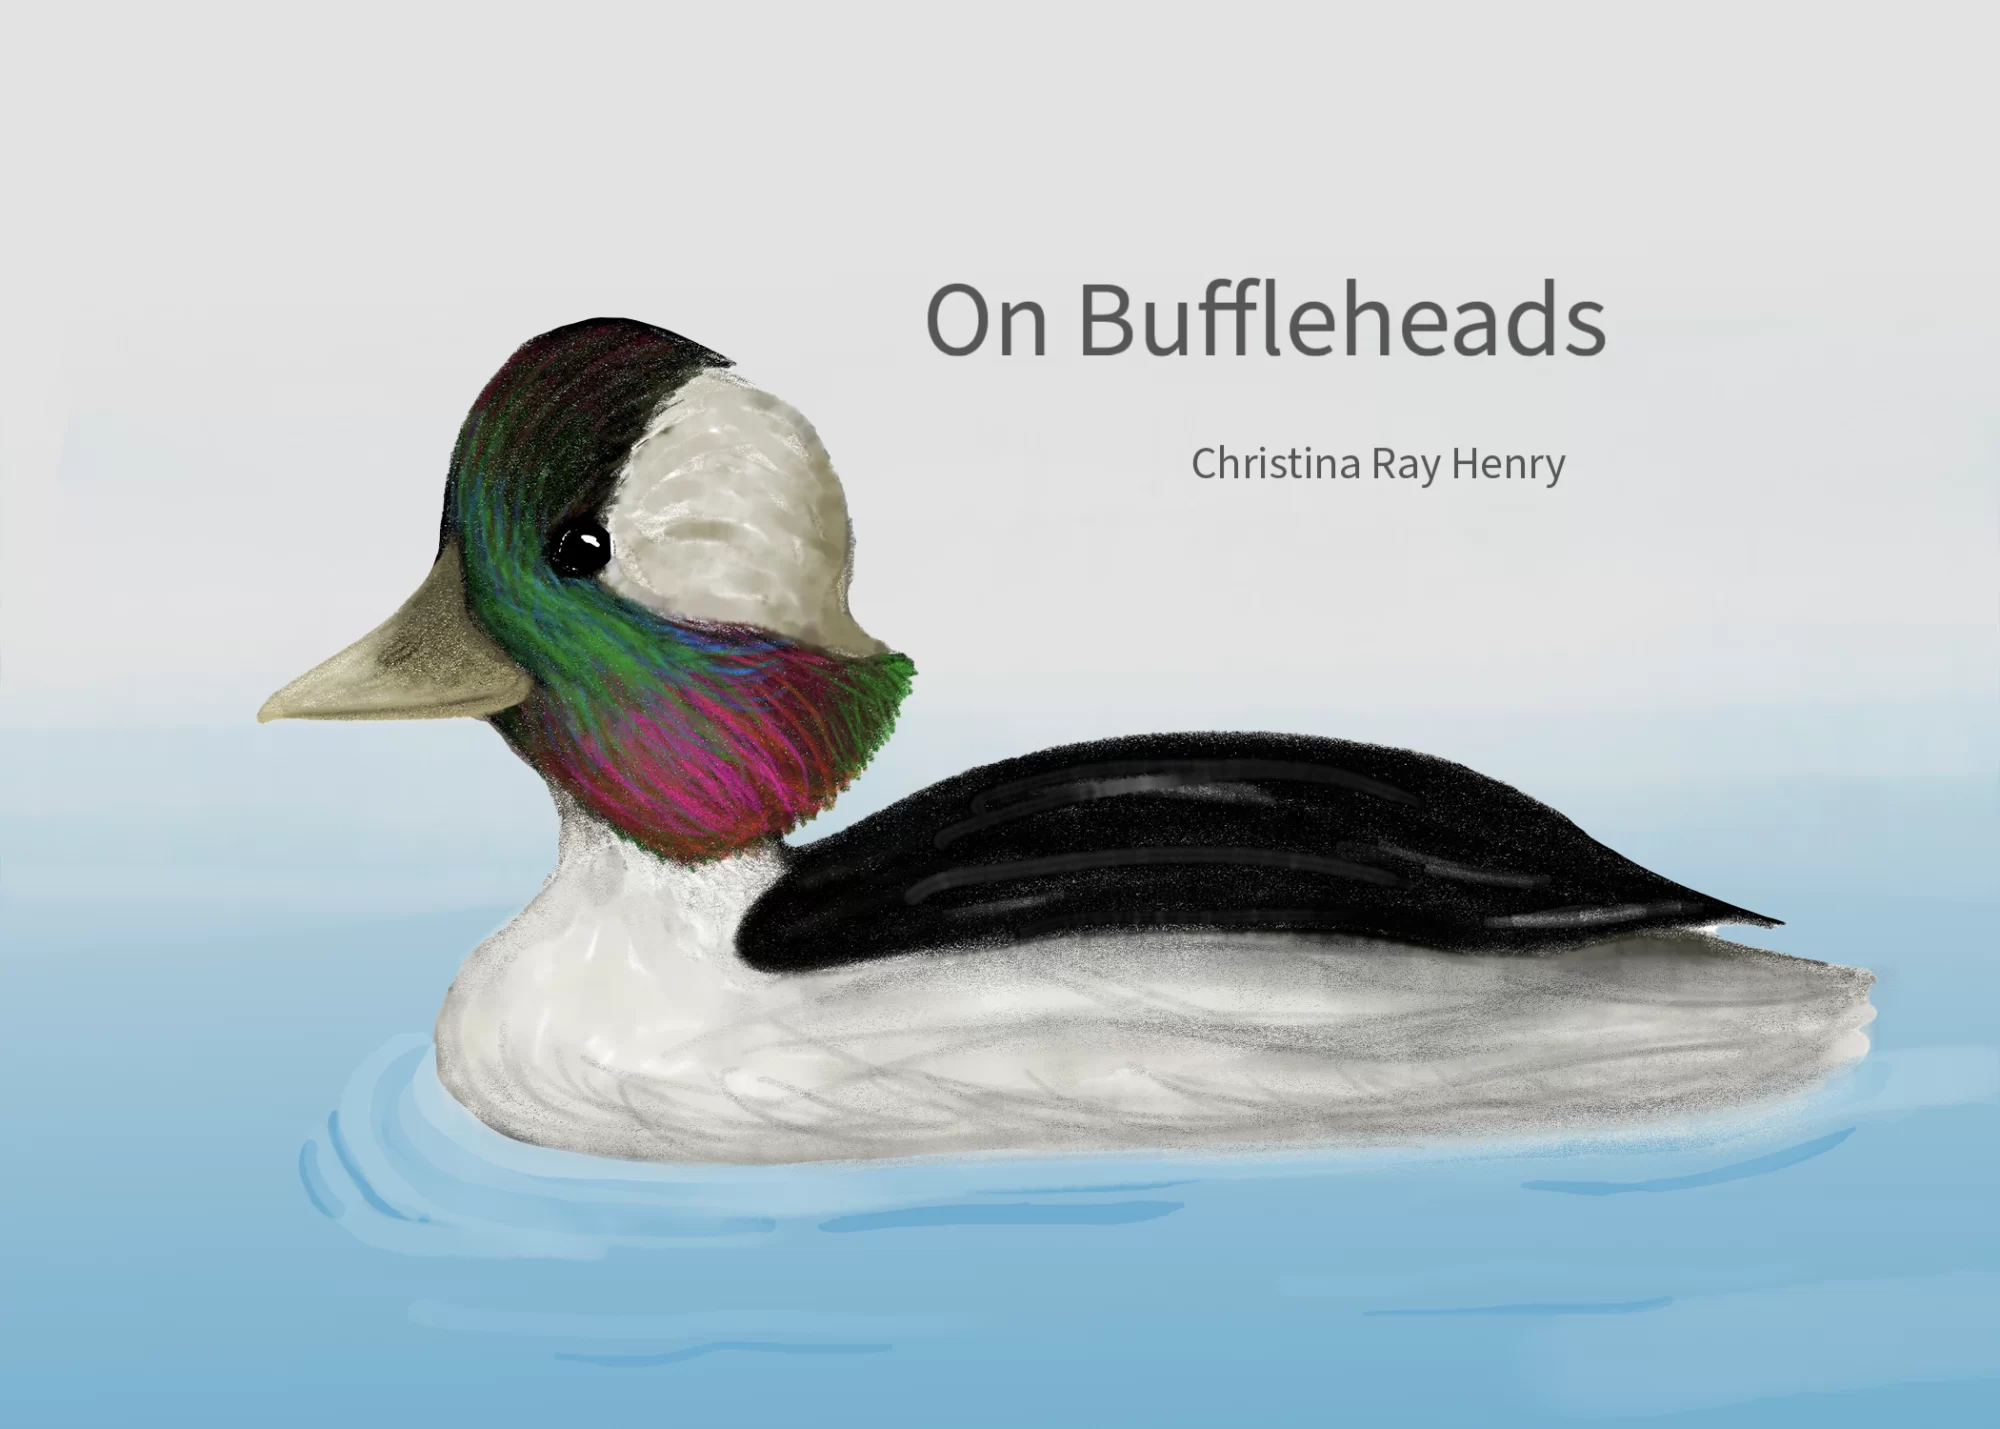 On Buffleheads by Christina Ray Henry